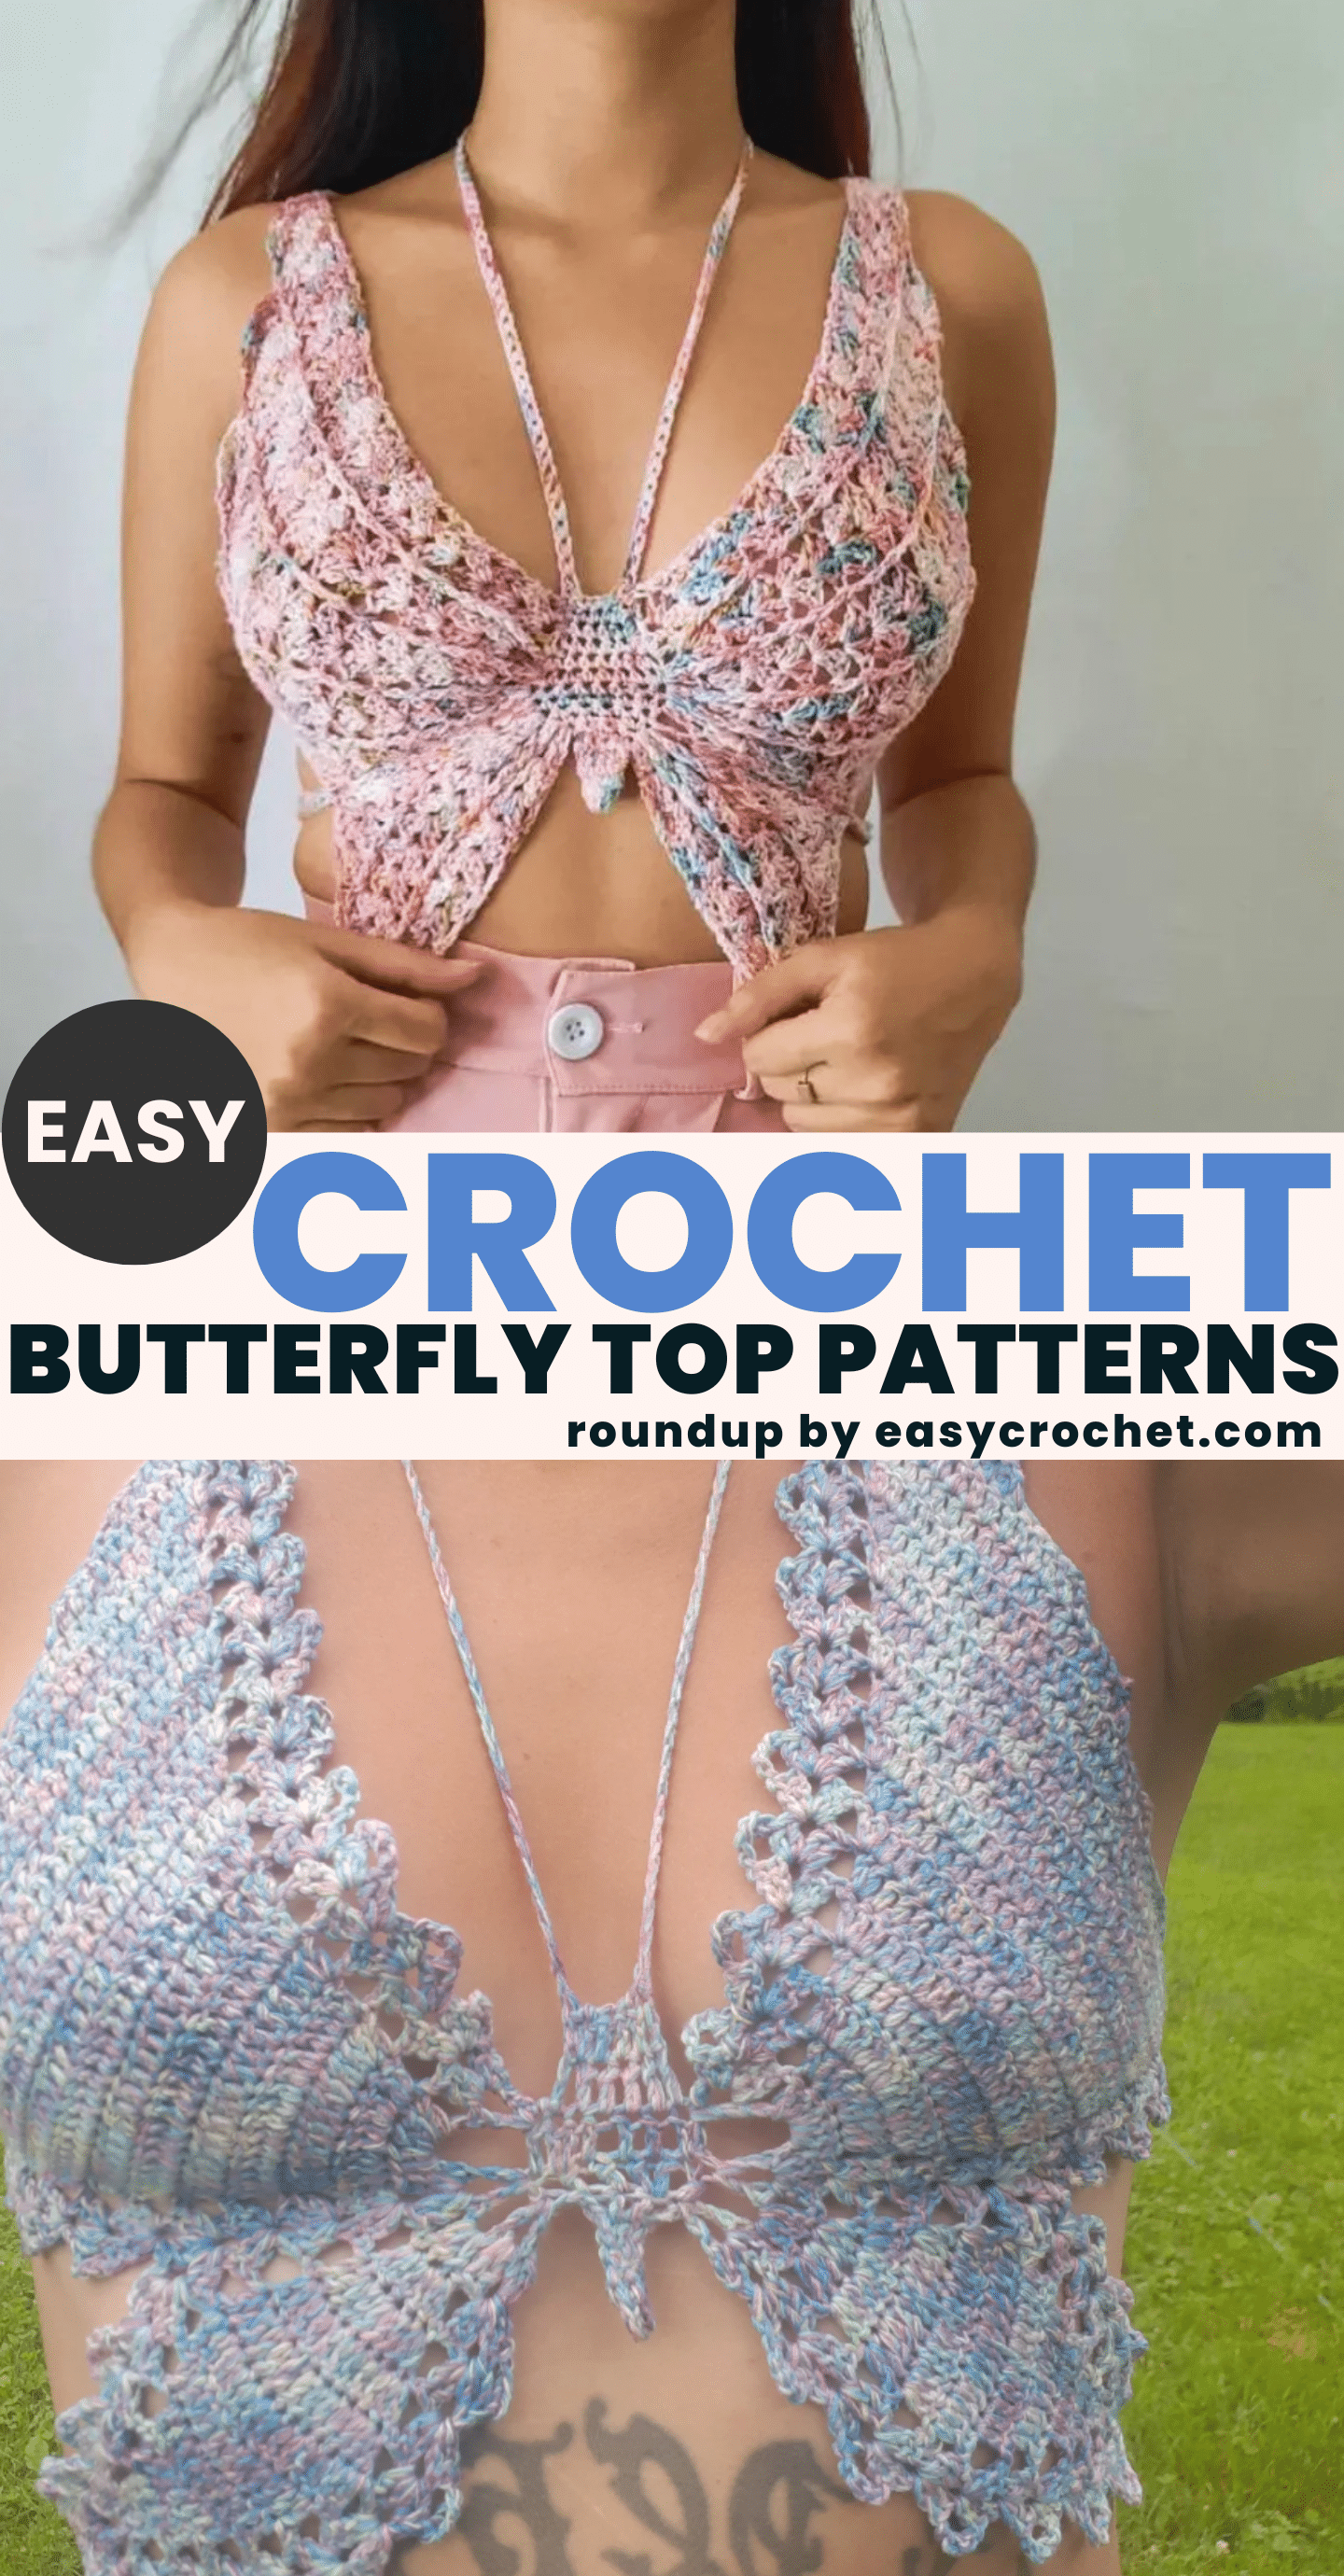 14 Easy to Make Crochet Butterfly Tops You'll Love - Easy Crochet